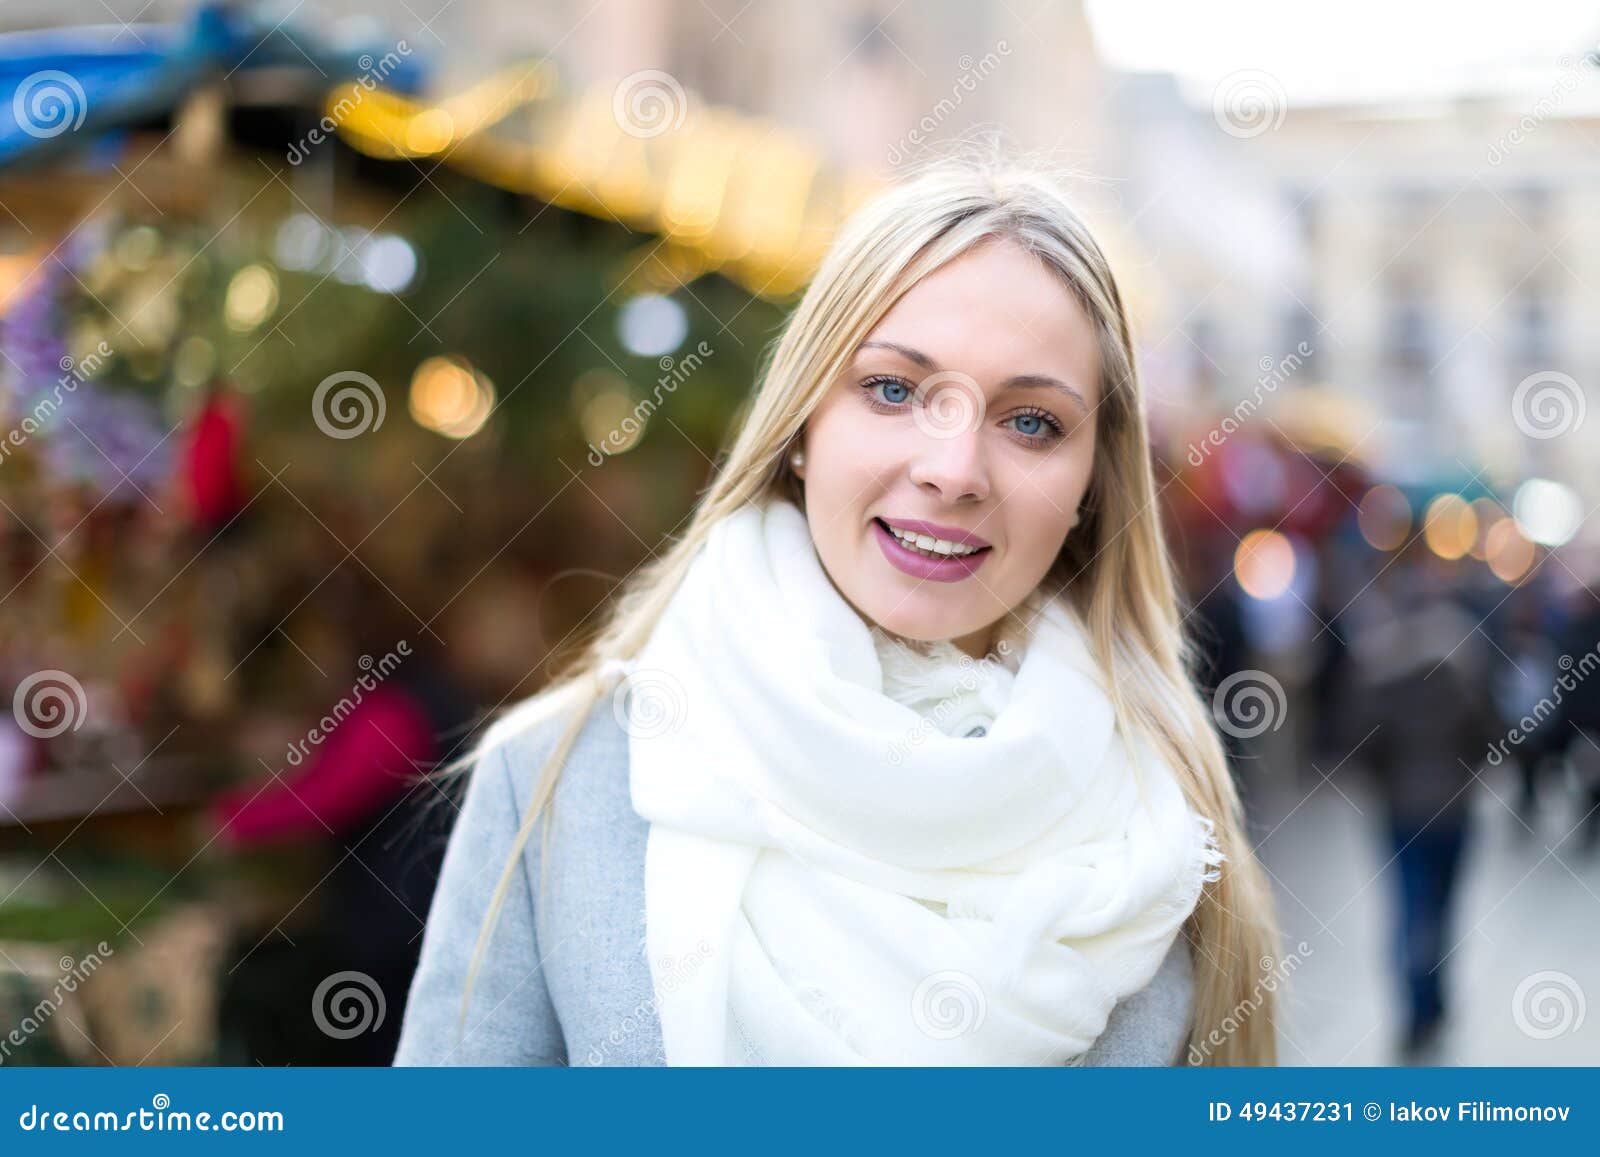 Woman at Christmas fair stock image. Image of market - 49437231